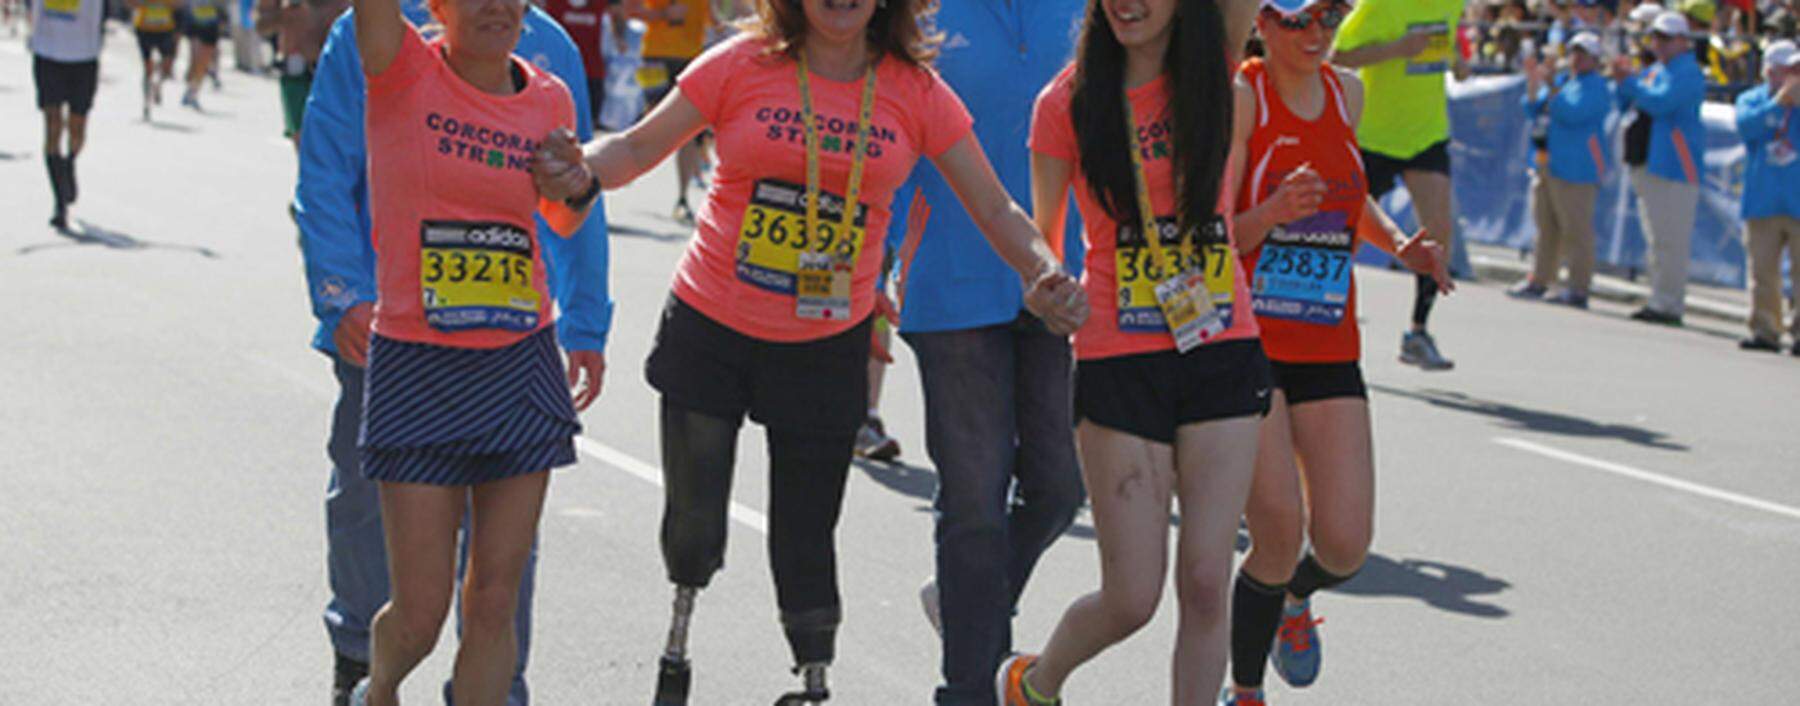 2013 Boston Marathon survivors Celeste Corcoran and her daughter Sydney finish the race with Acabbo, who ran the 118th Boston Marathon, in Boston